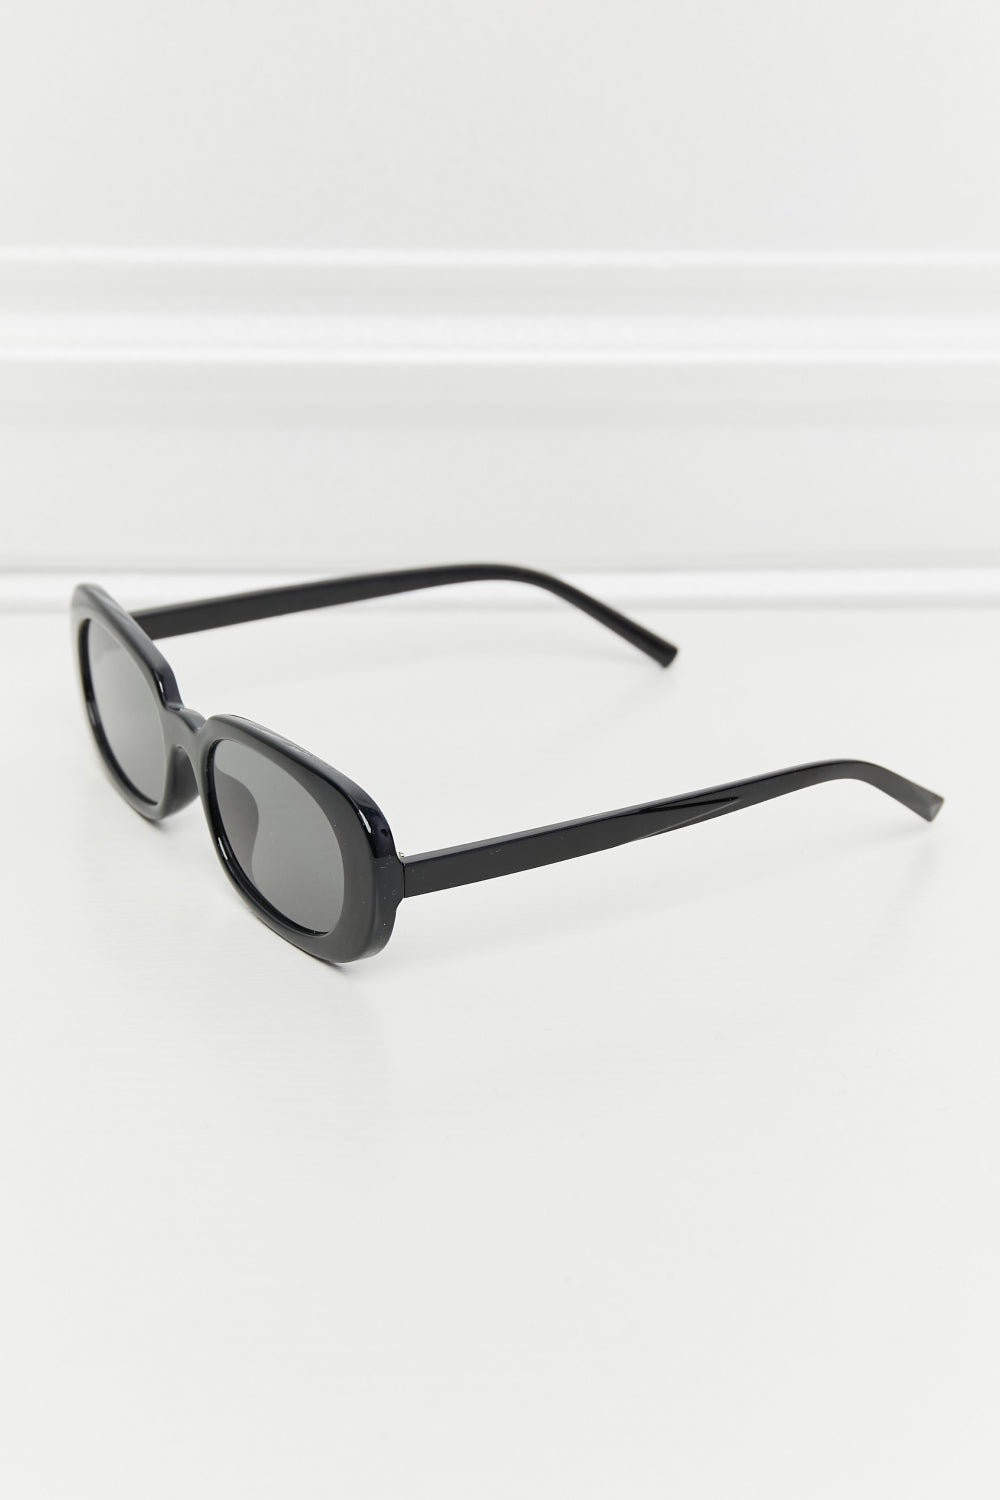 Oval Full Rim Sunglasses Black One Size Sunglasses by Vim&Vigor | Vim&Vigor Boutique